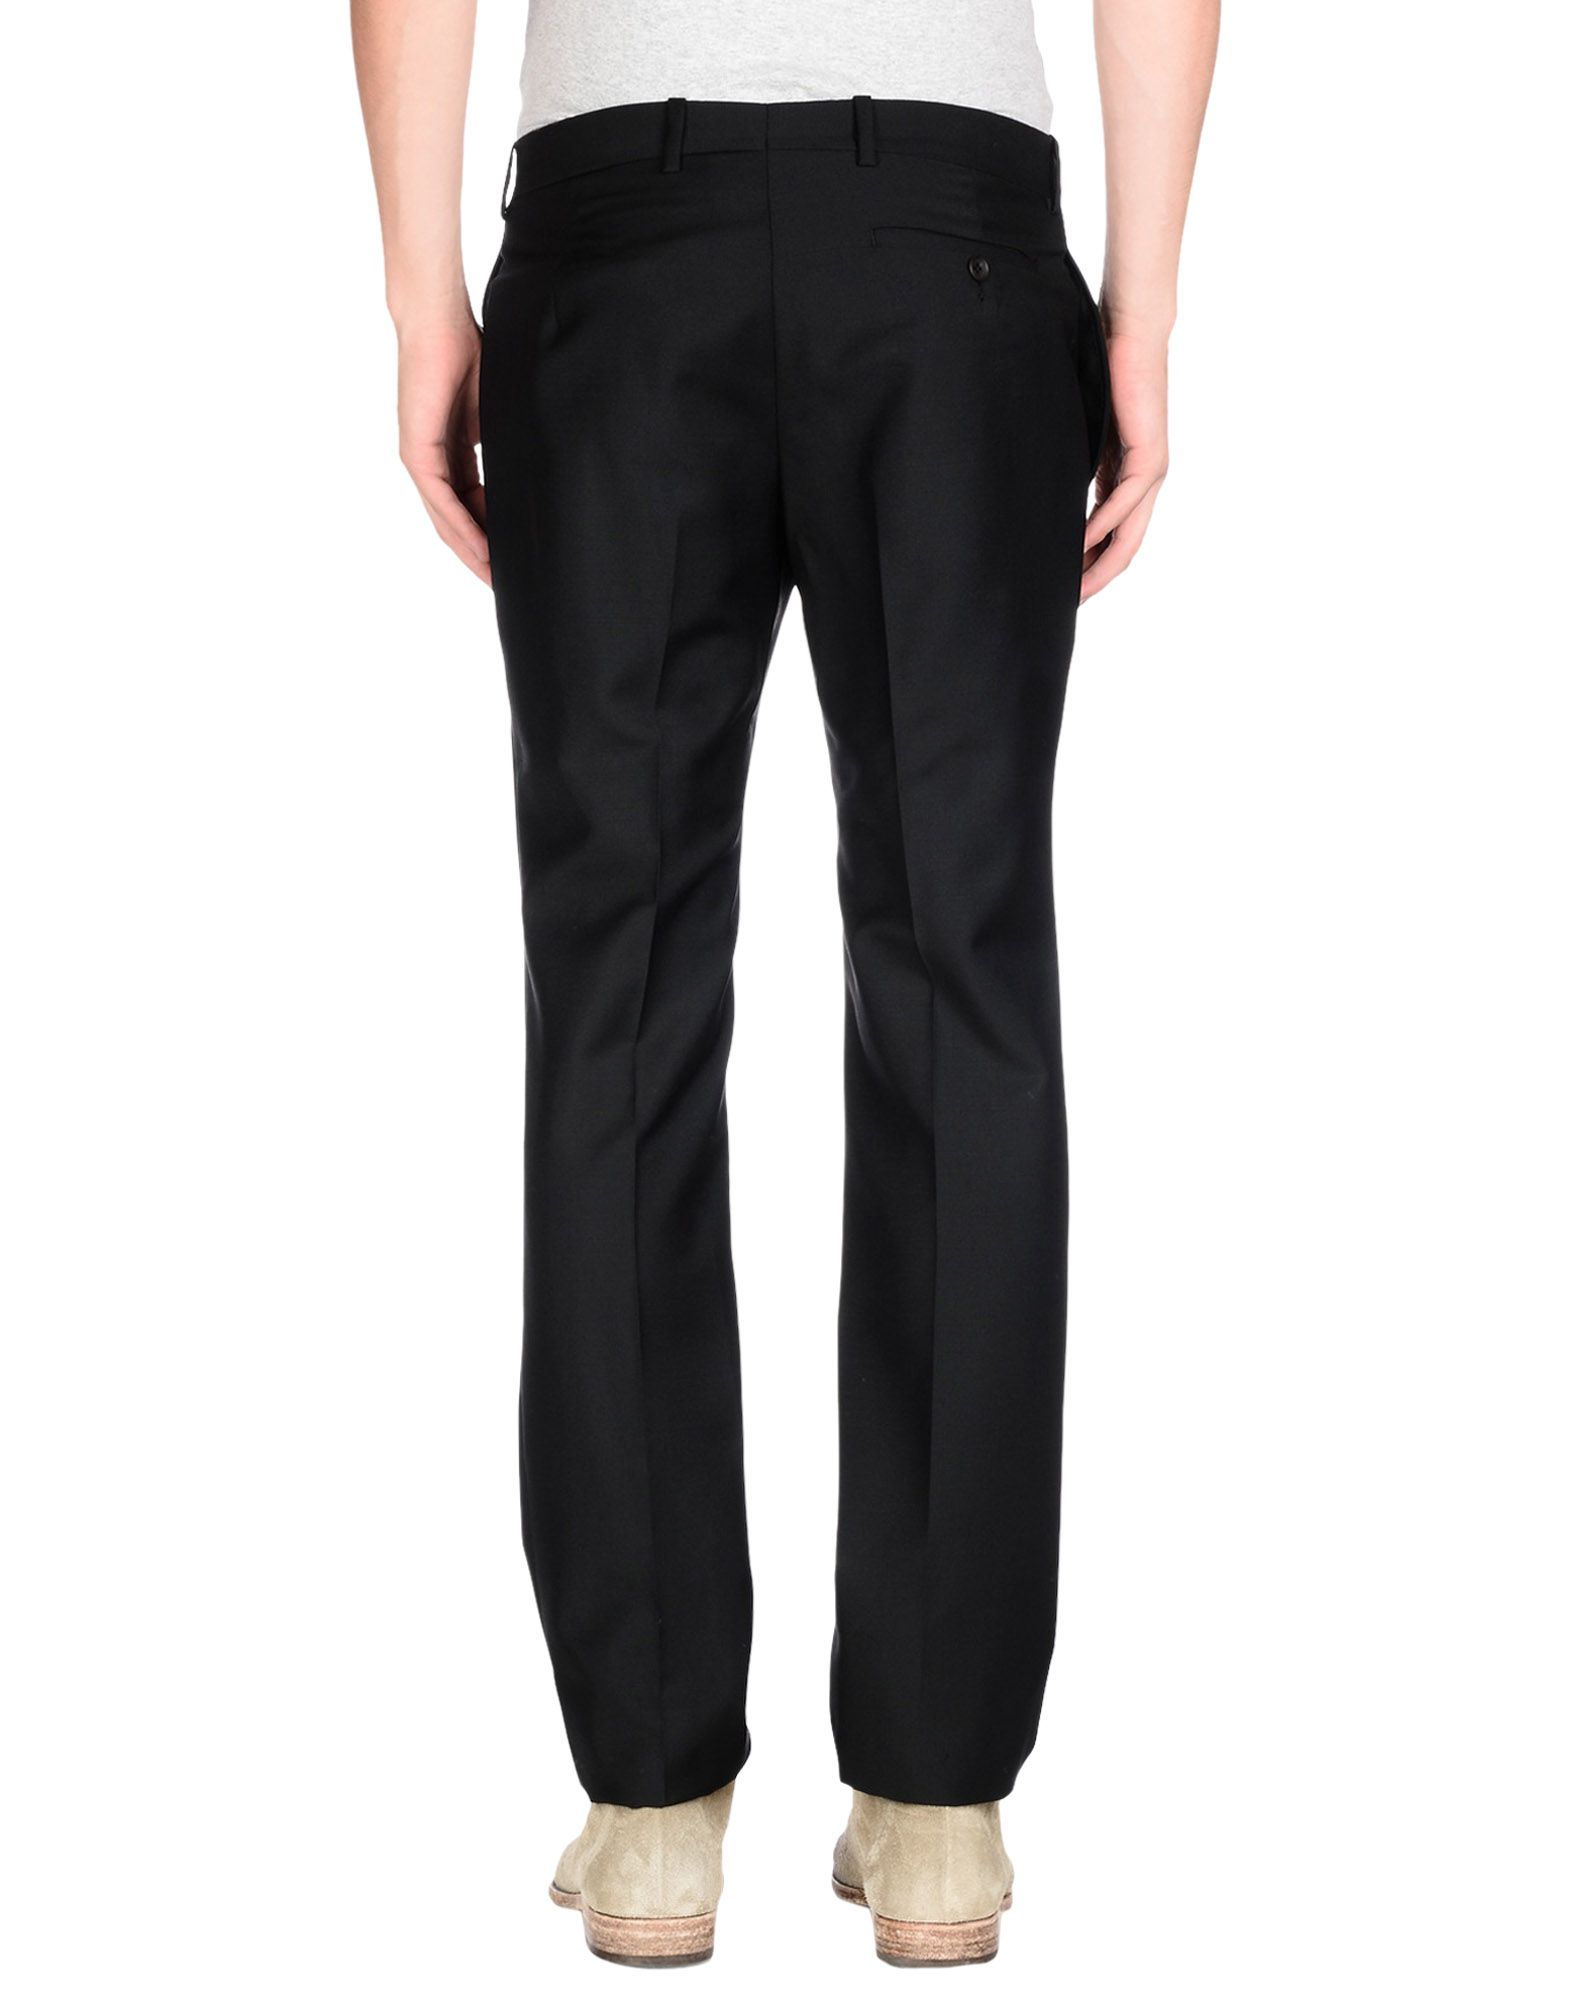 Lyst - Balenciaga Casual Trouser in Black for Men